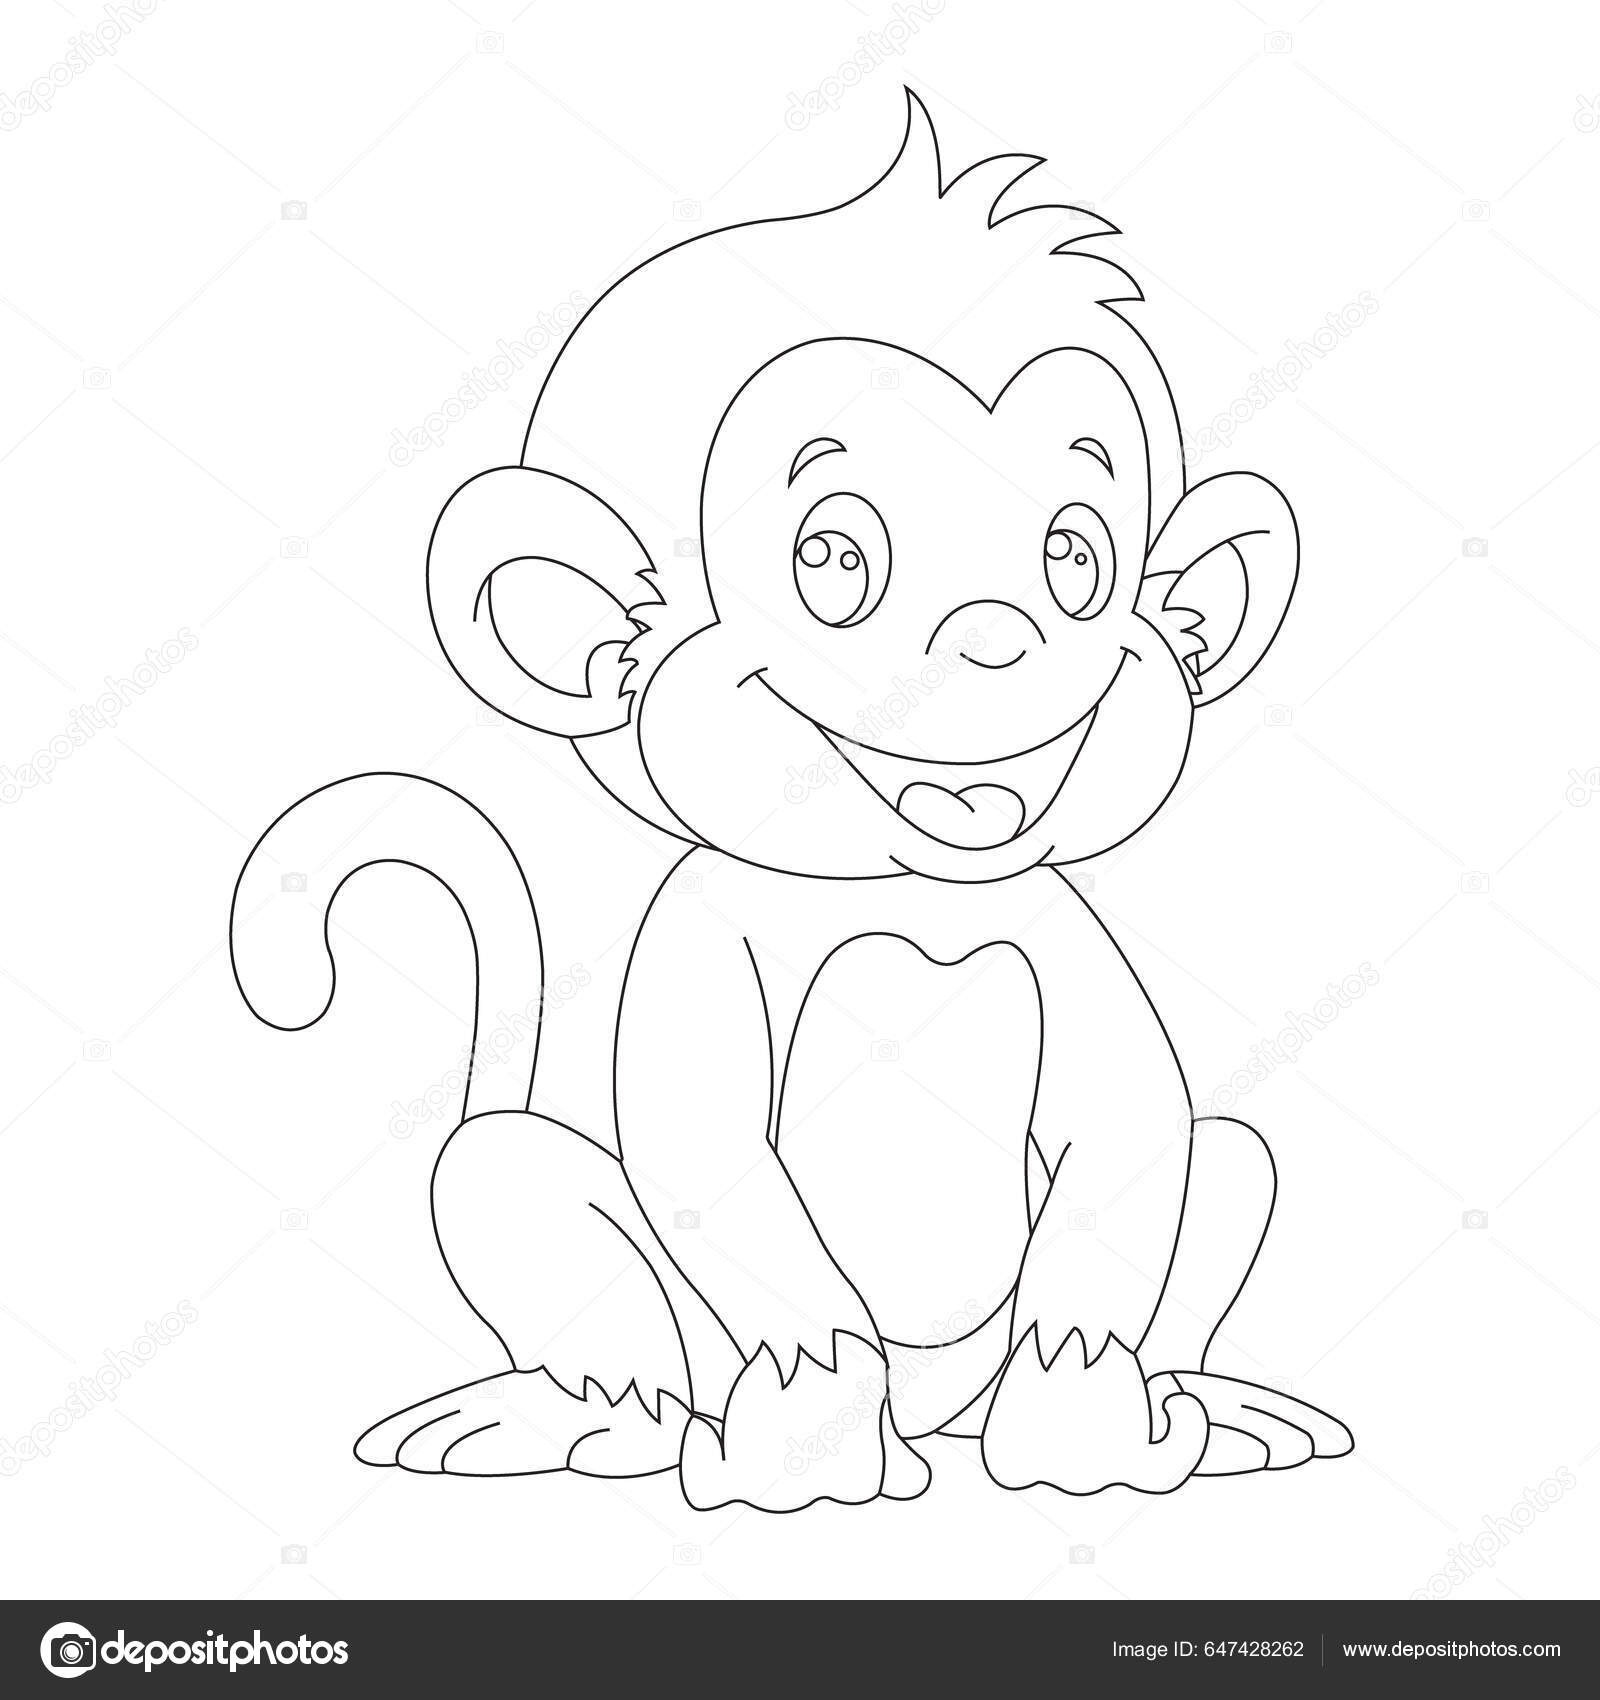 Cartoon sad monkey coloring page Royalty Free Vector Image